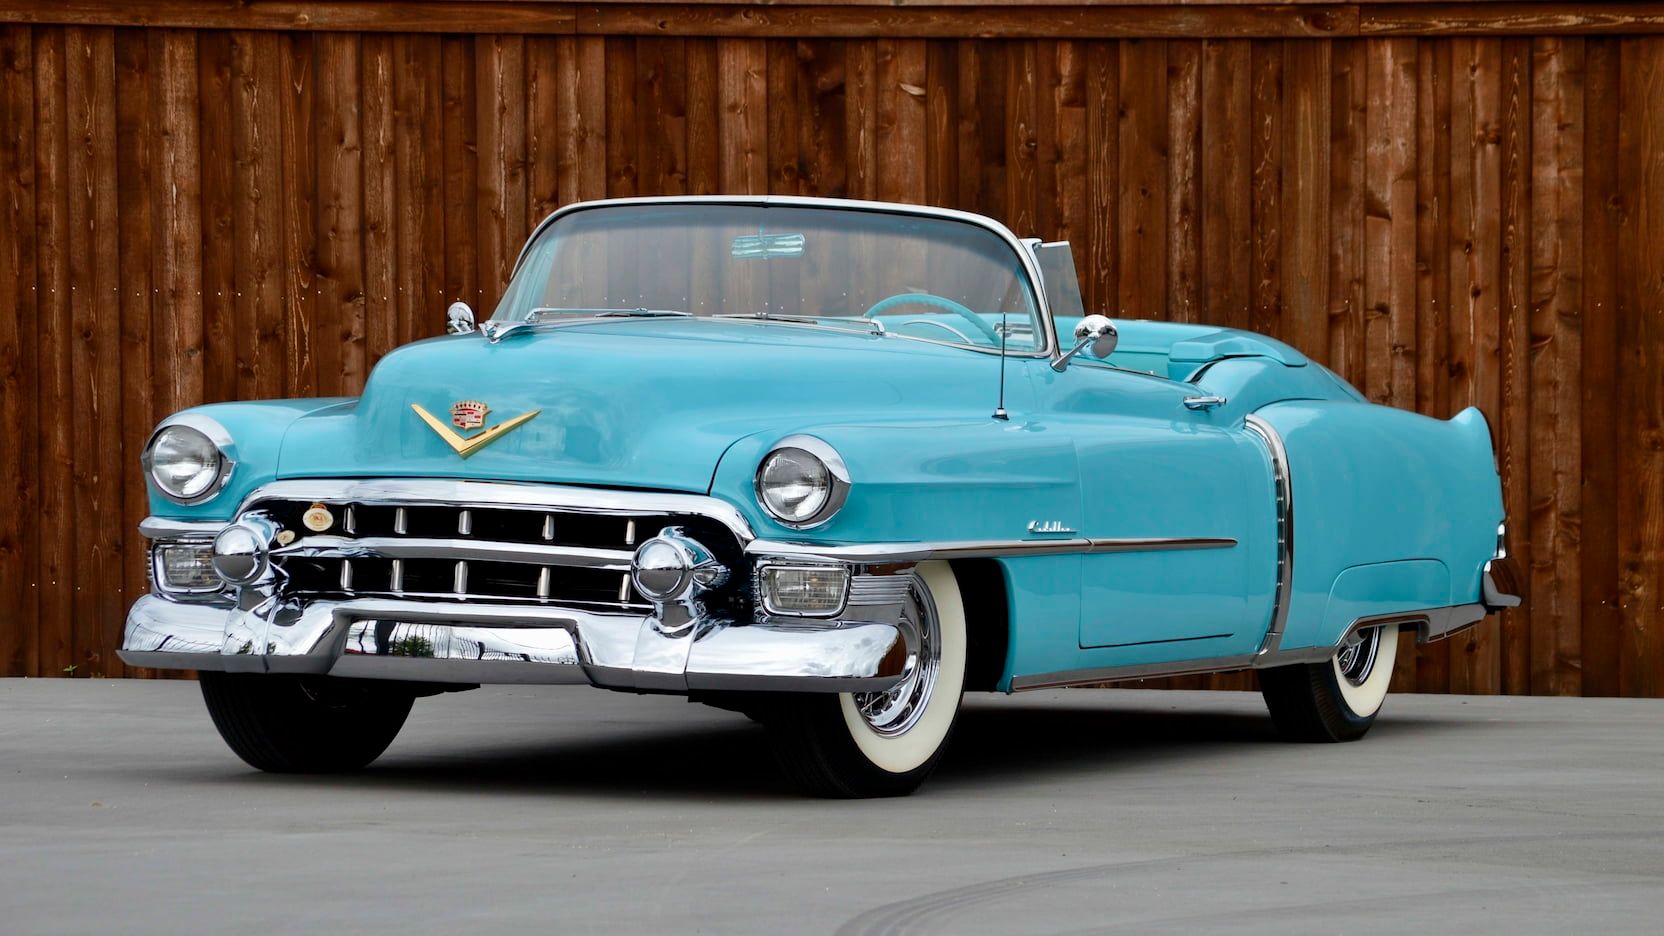 Cadillac Eldorado from 1954, light blue